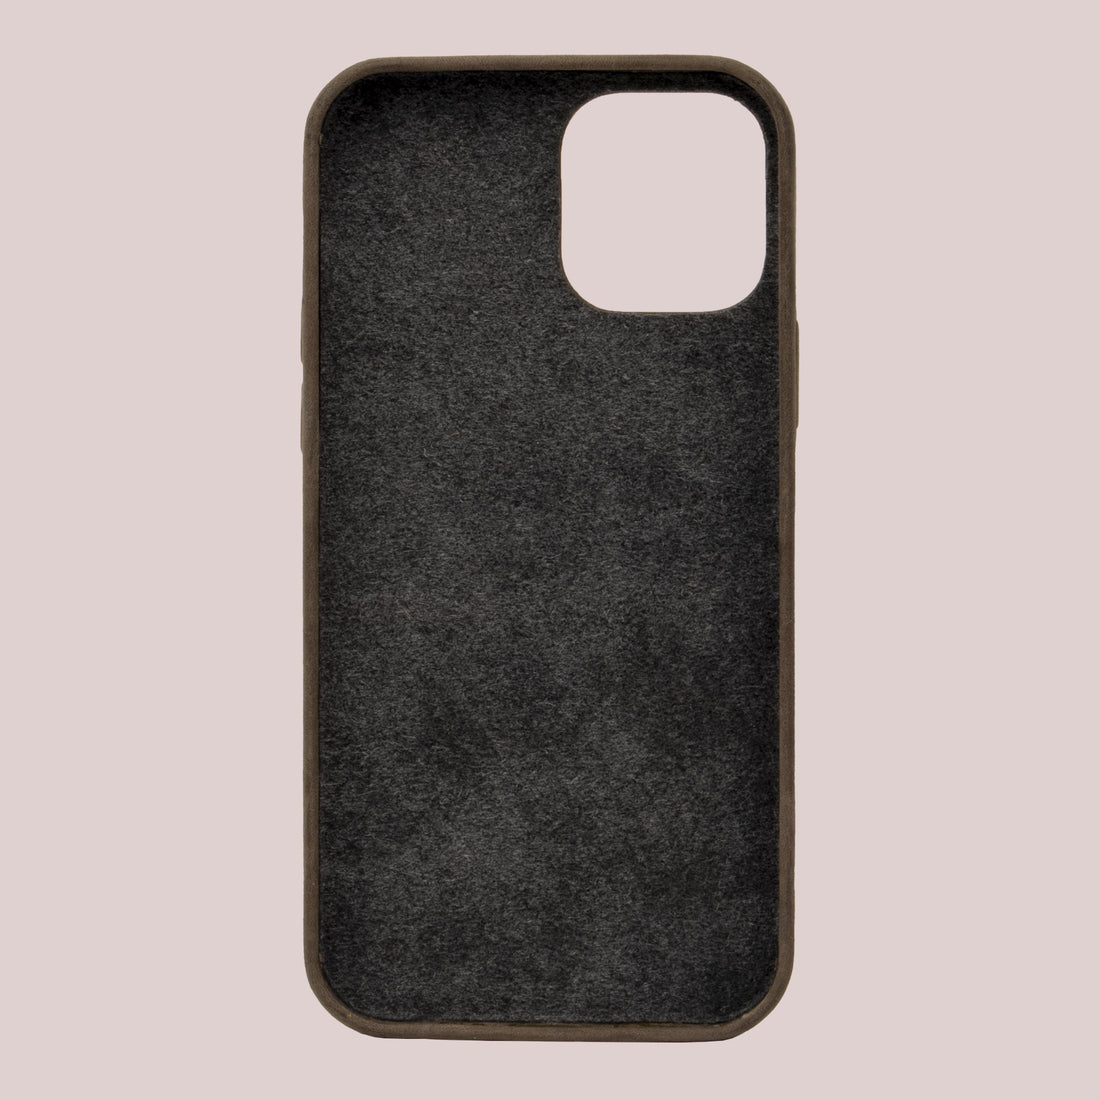 Baxter Card Case for iPhone 12 Mini - Onyx Black